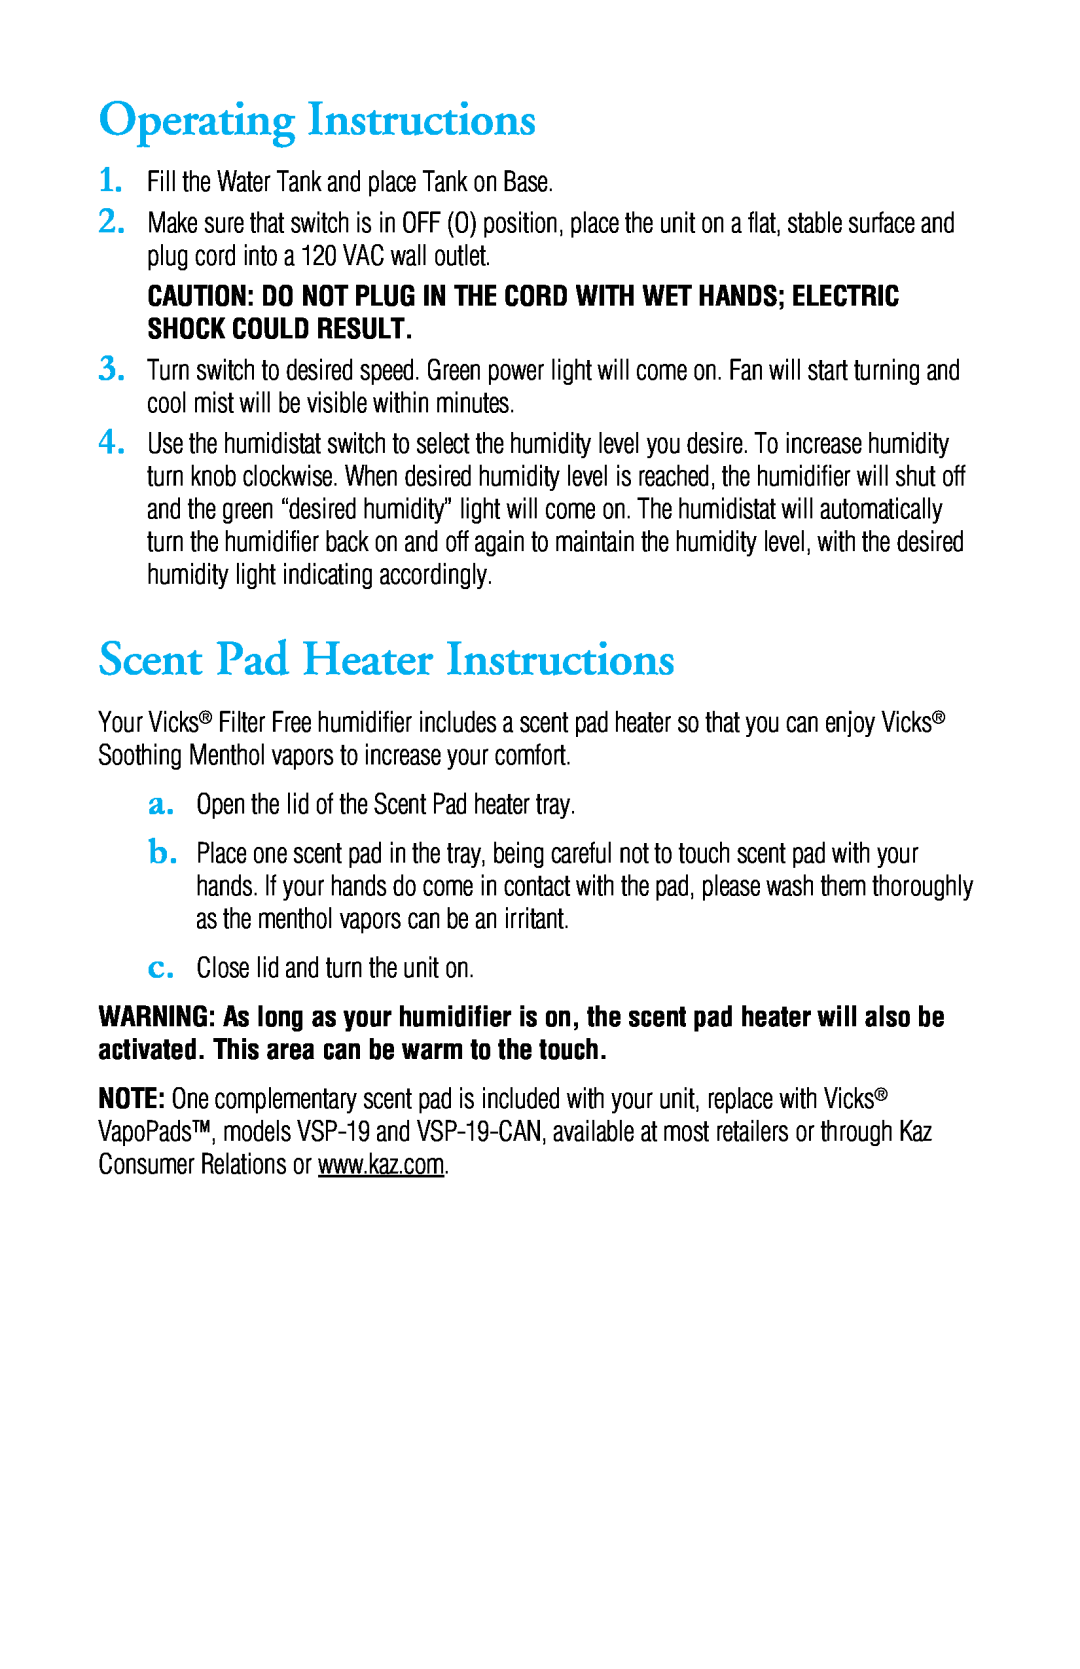 Honeywell V4500 manual Operating Instructions, Scent Pad Heater Instructions 